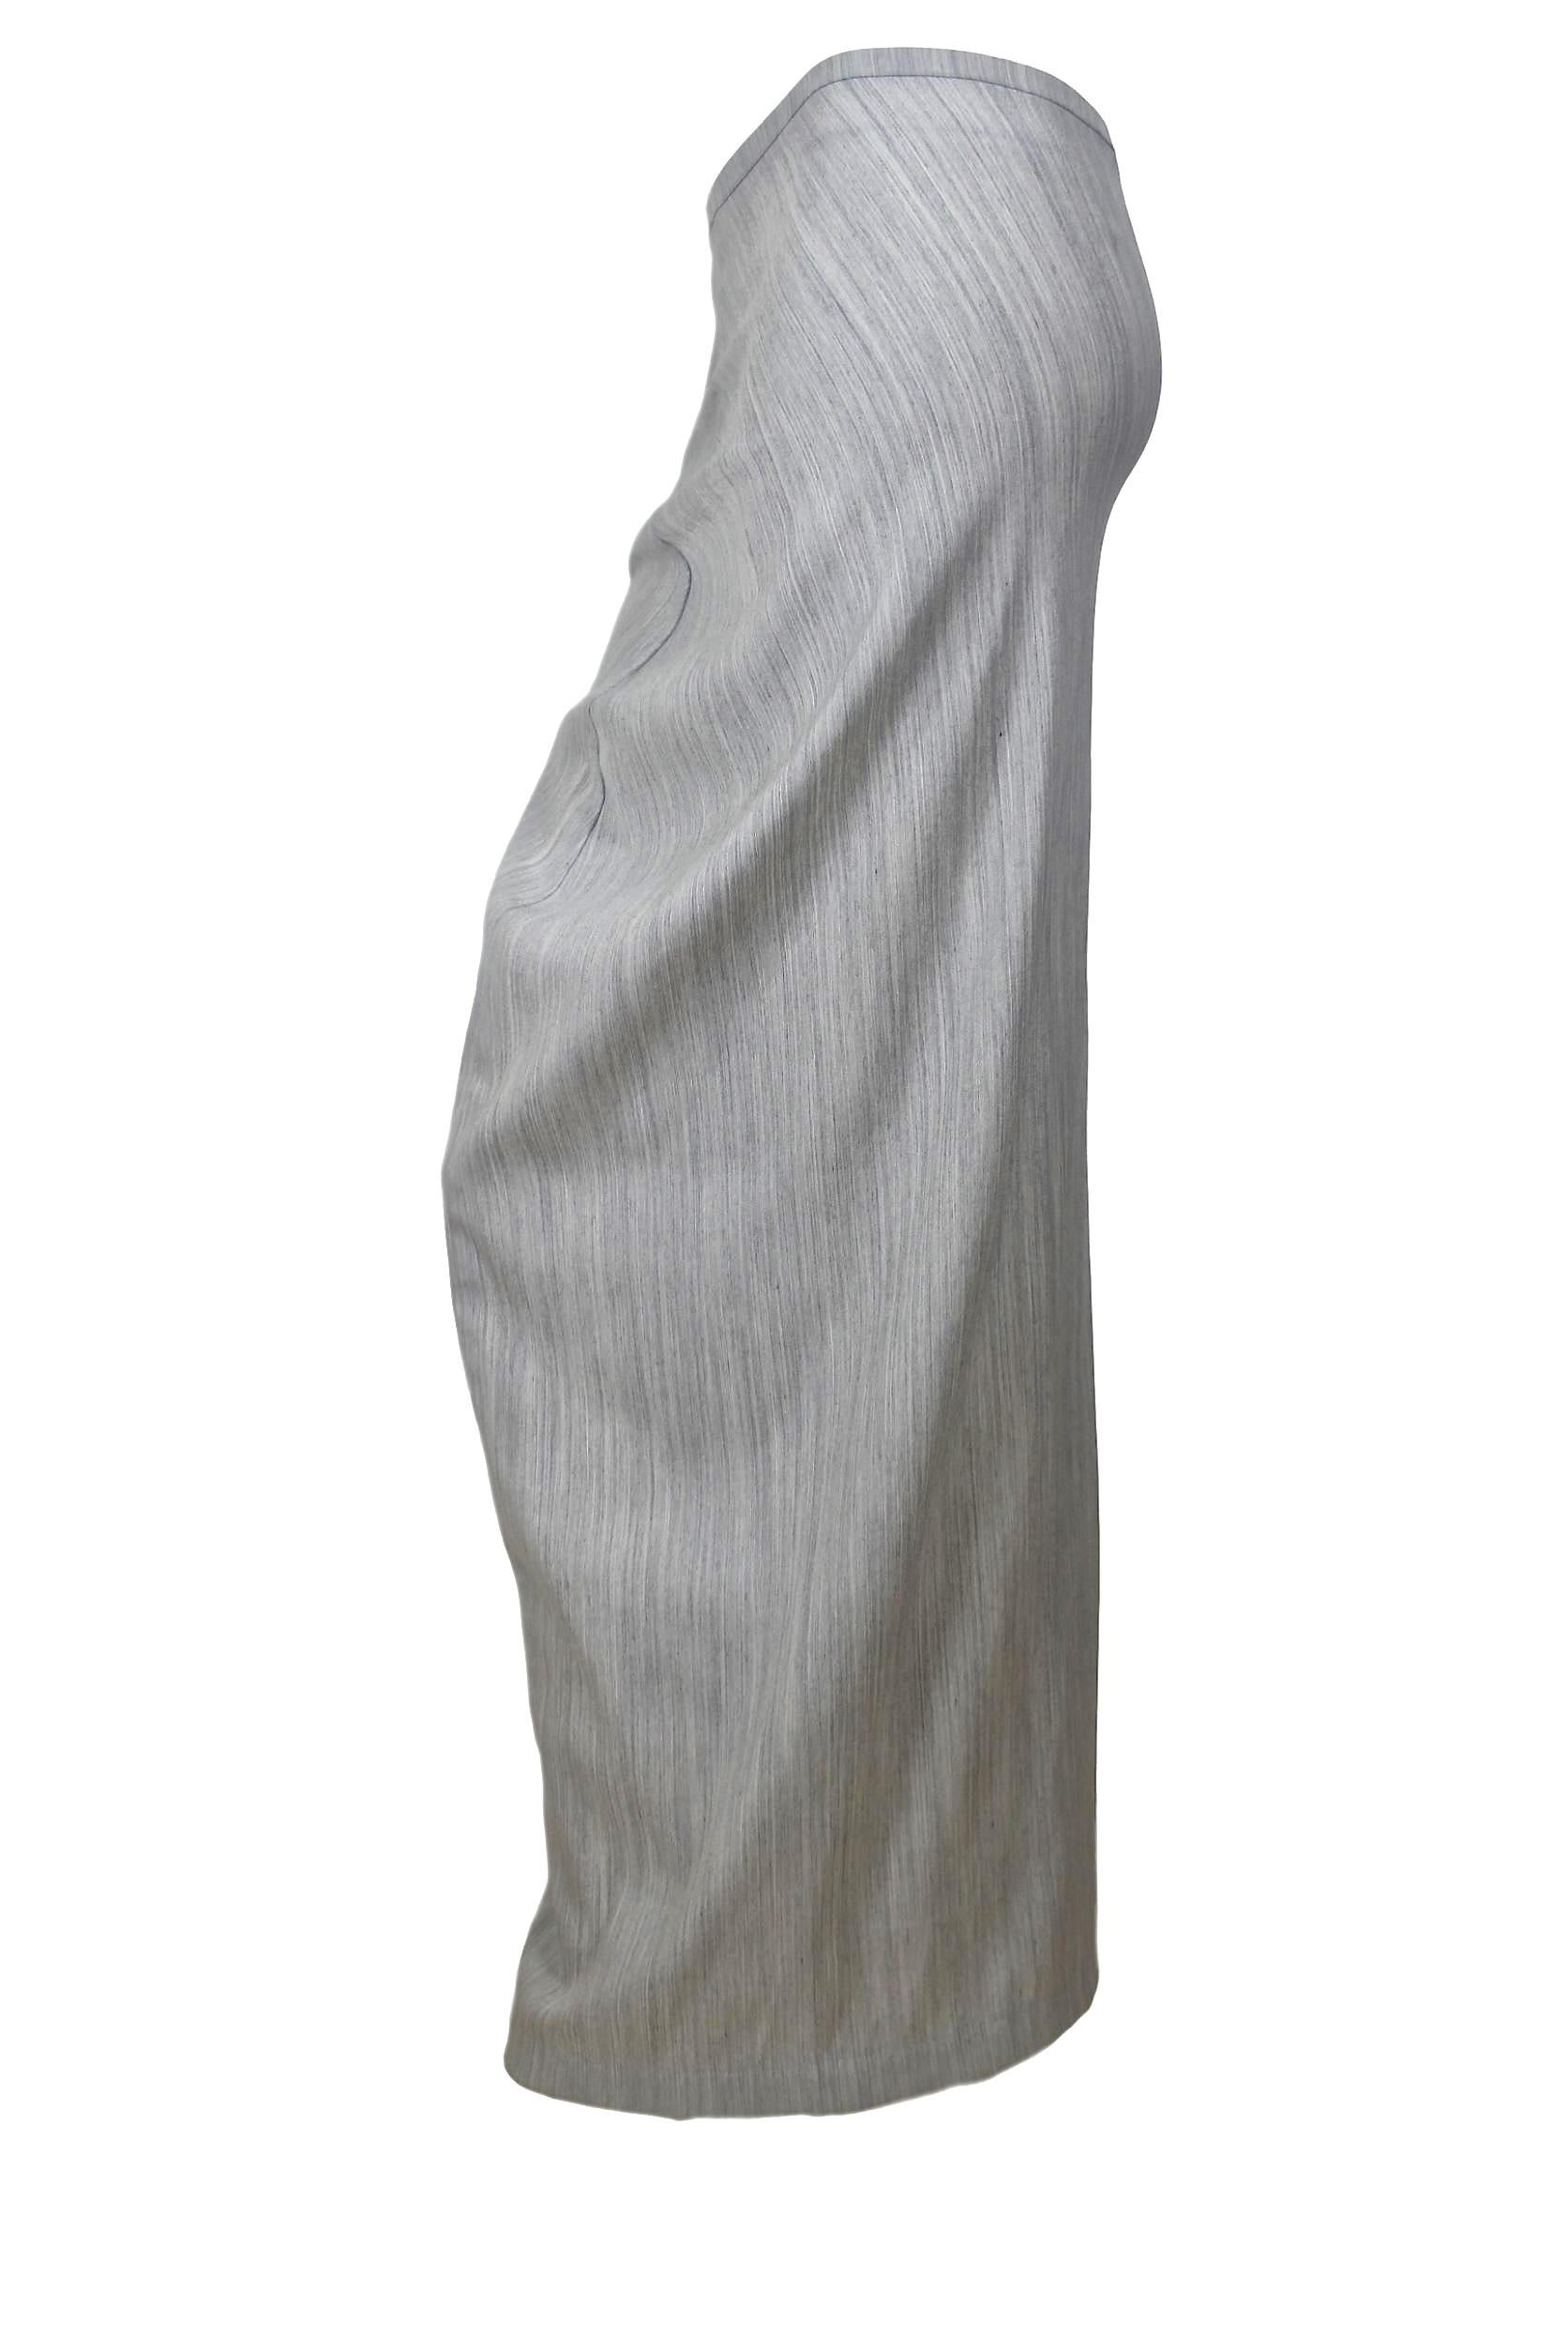 Gray Comme des Garcons Robe de Chambre Skirt AD 1996 For Sale